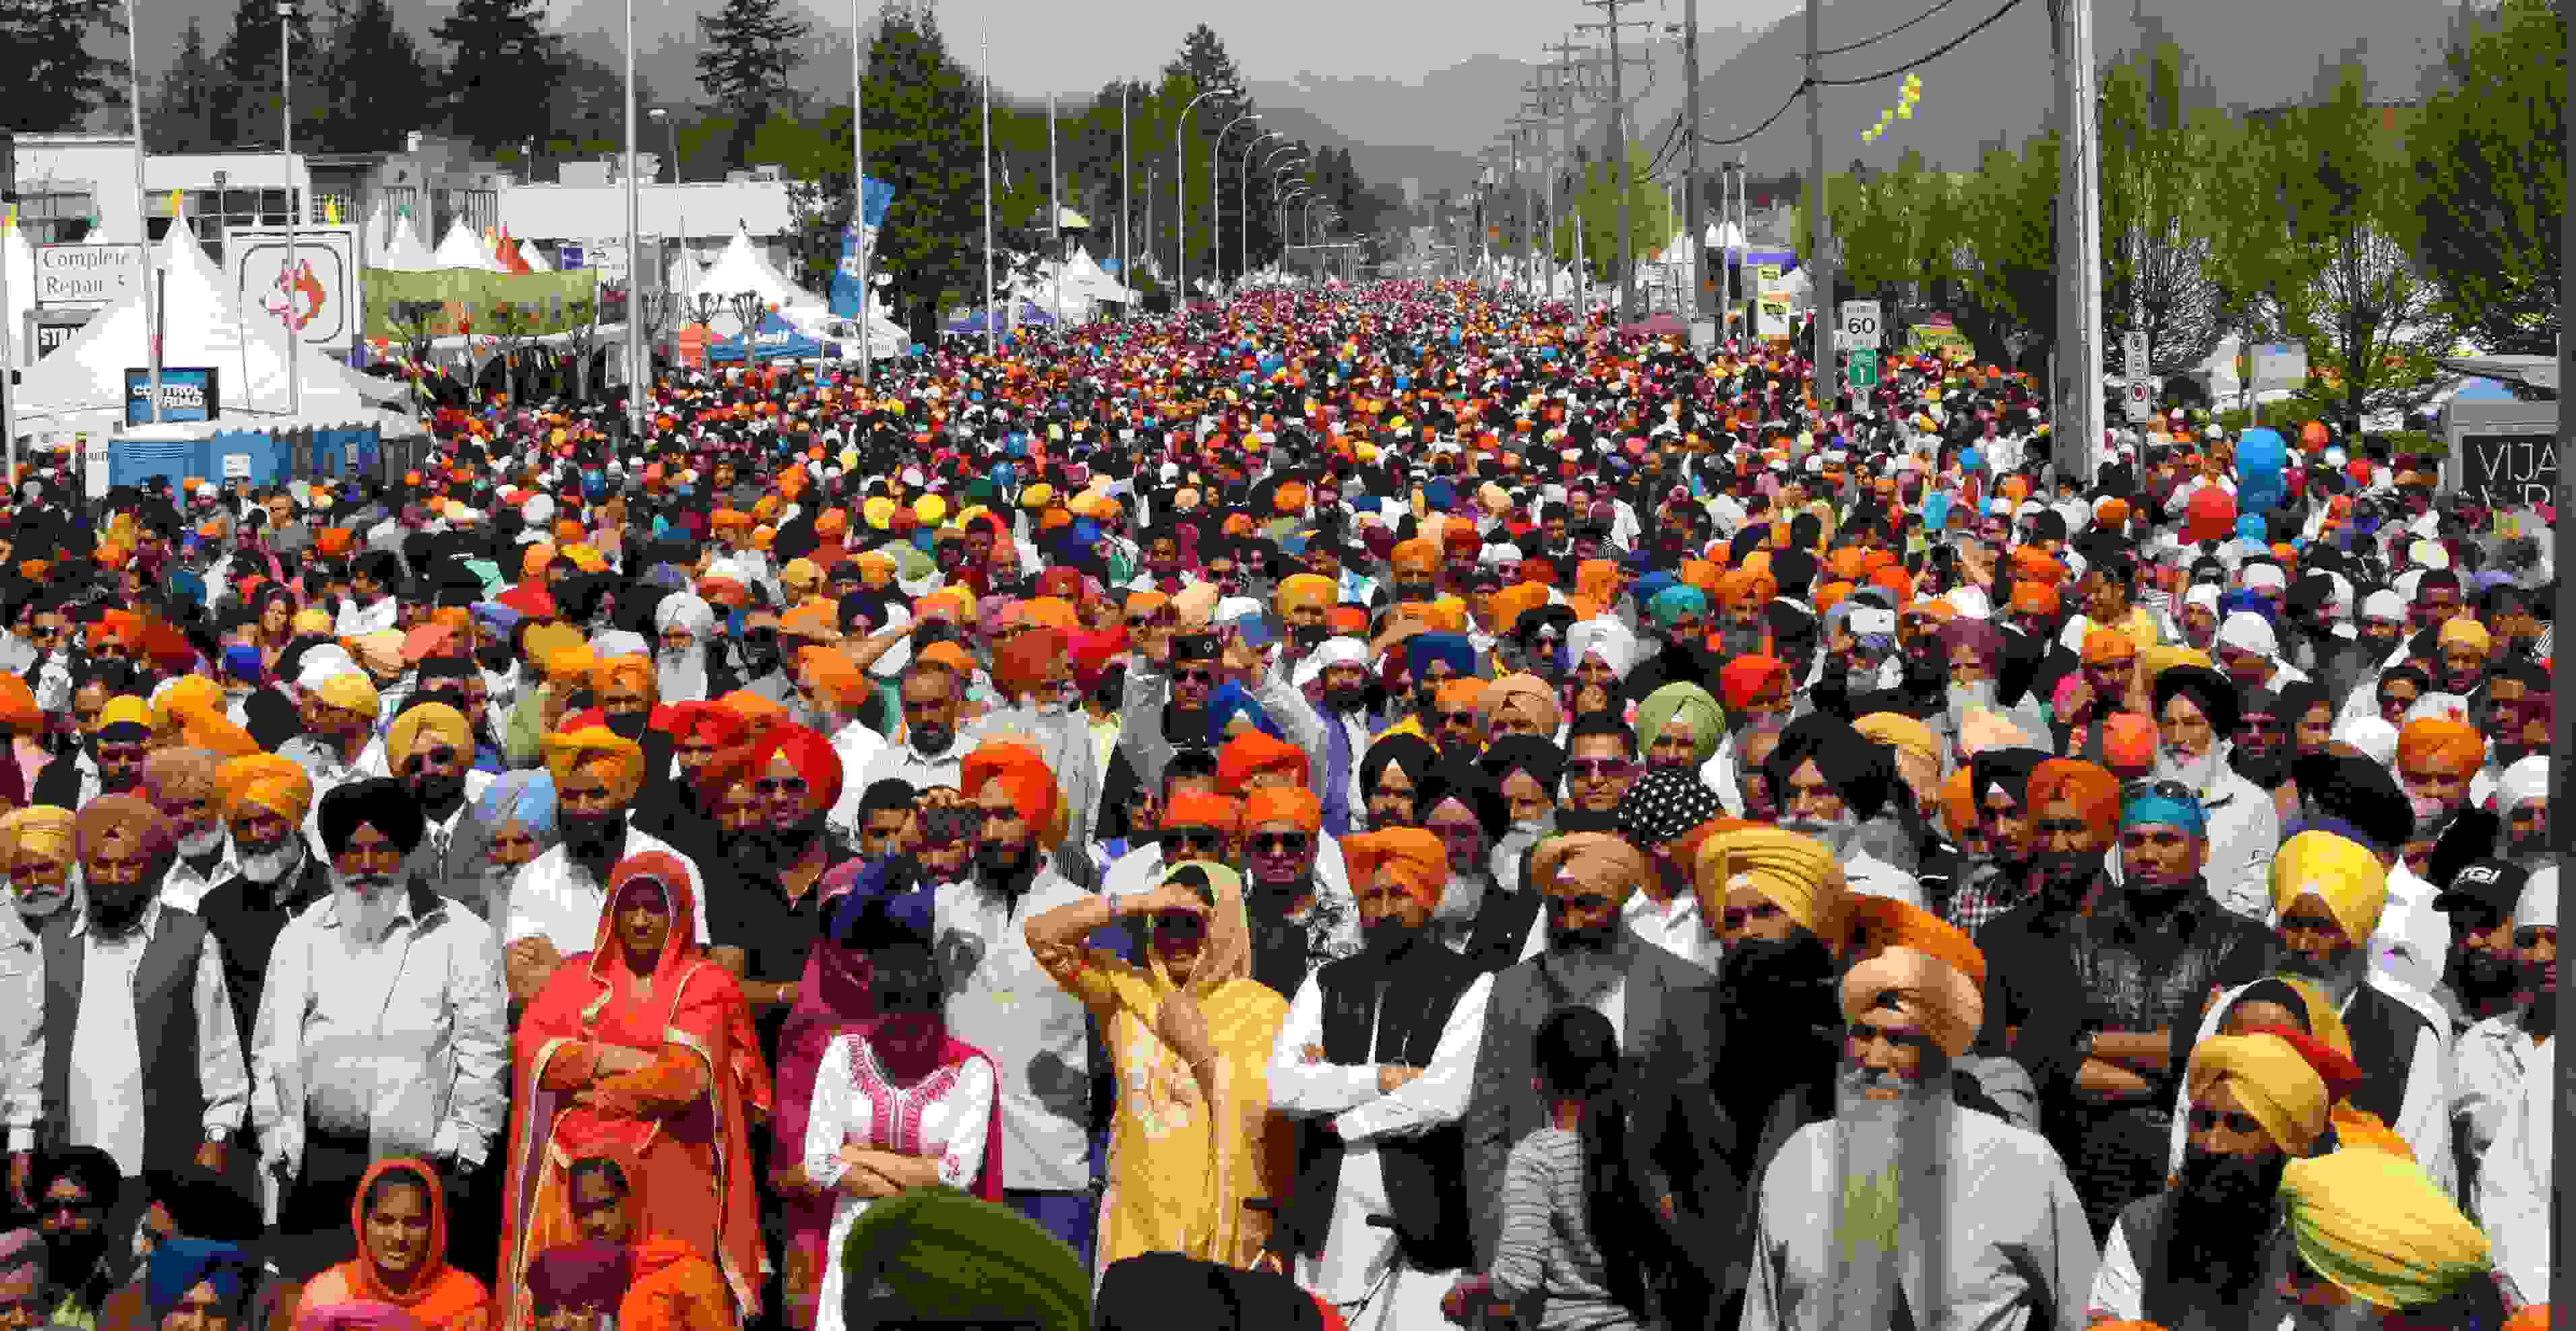 More than 500K expected at Surrey’s annual Vaisakhi parade